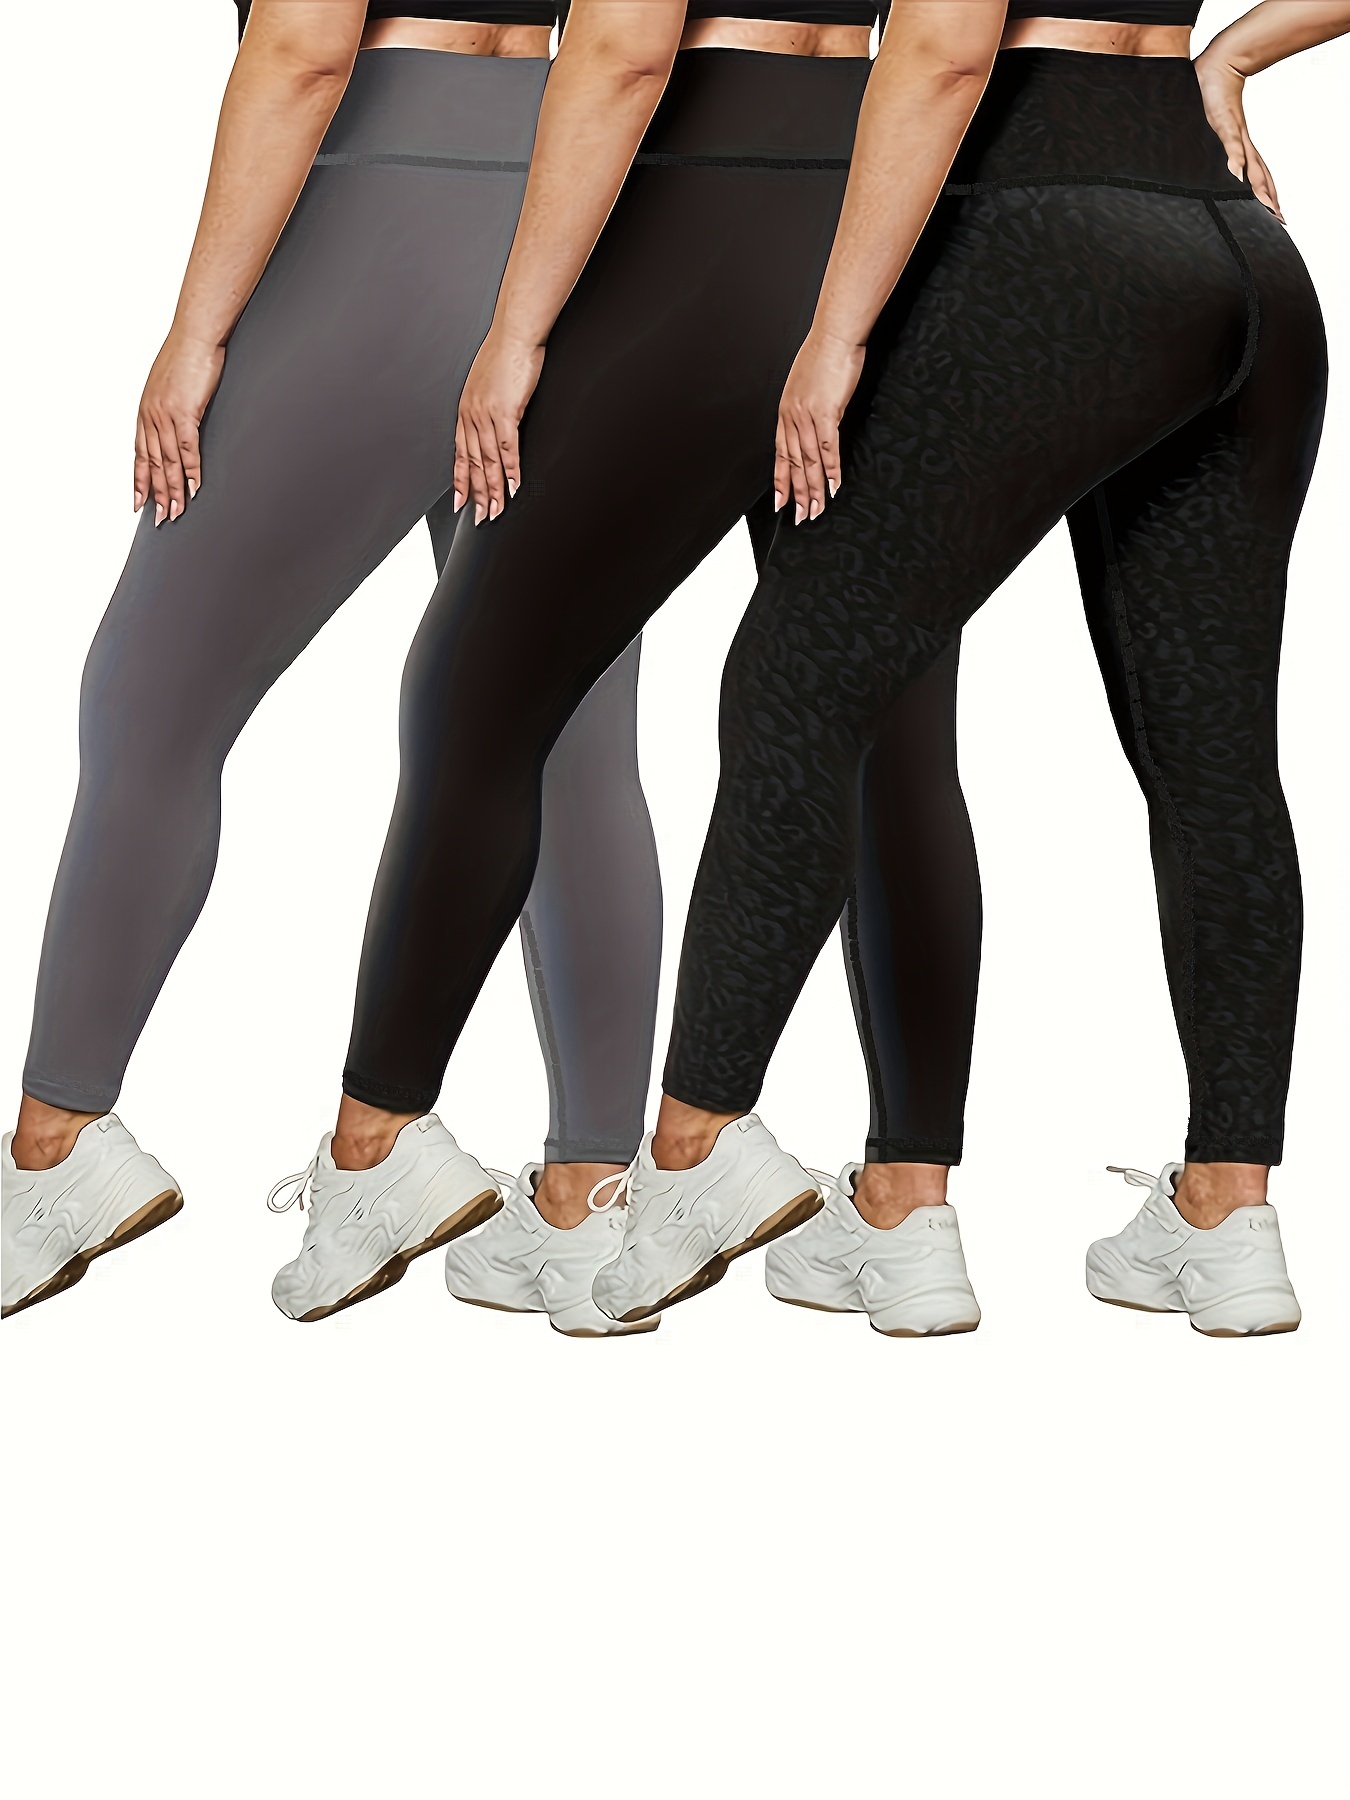 Plus Size Sports Leggings Women's Plus Camo High Rise Stretchy Skinny Running Pants -